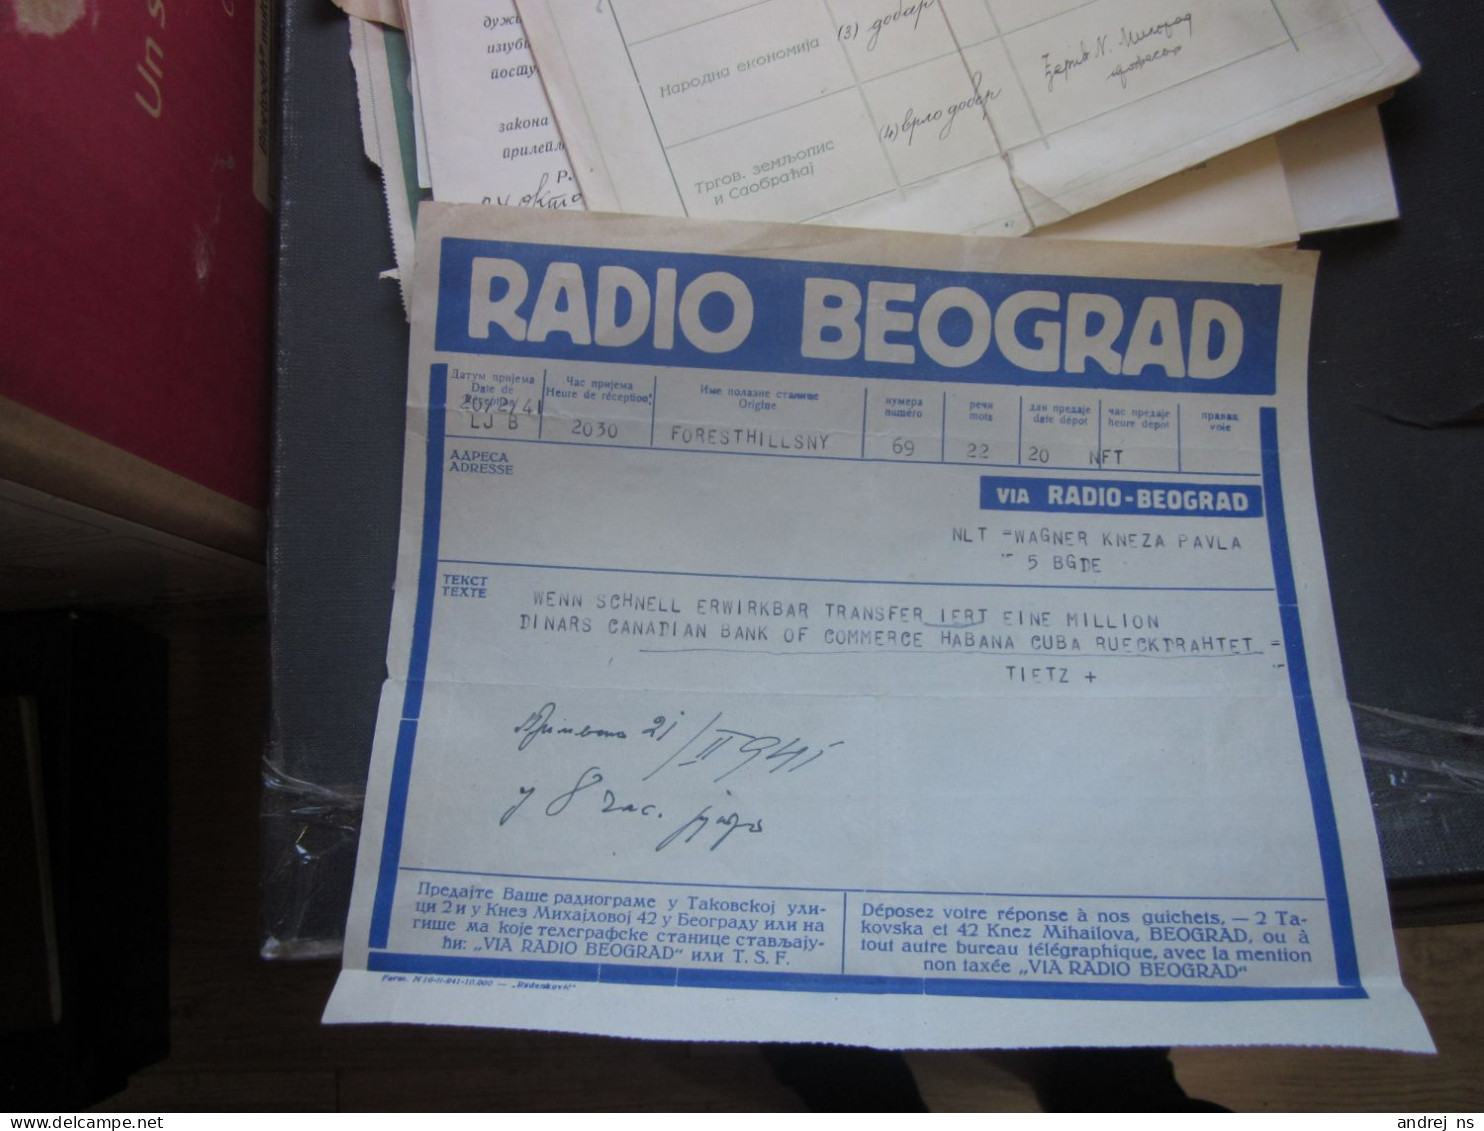 Radiogram Radio Beograd New York 1941 WW2 - Briefe U. Dokumente